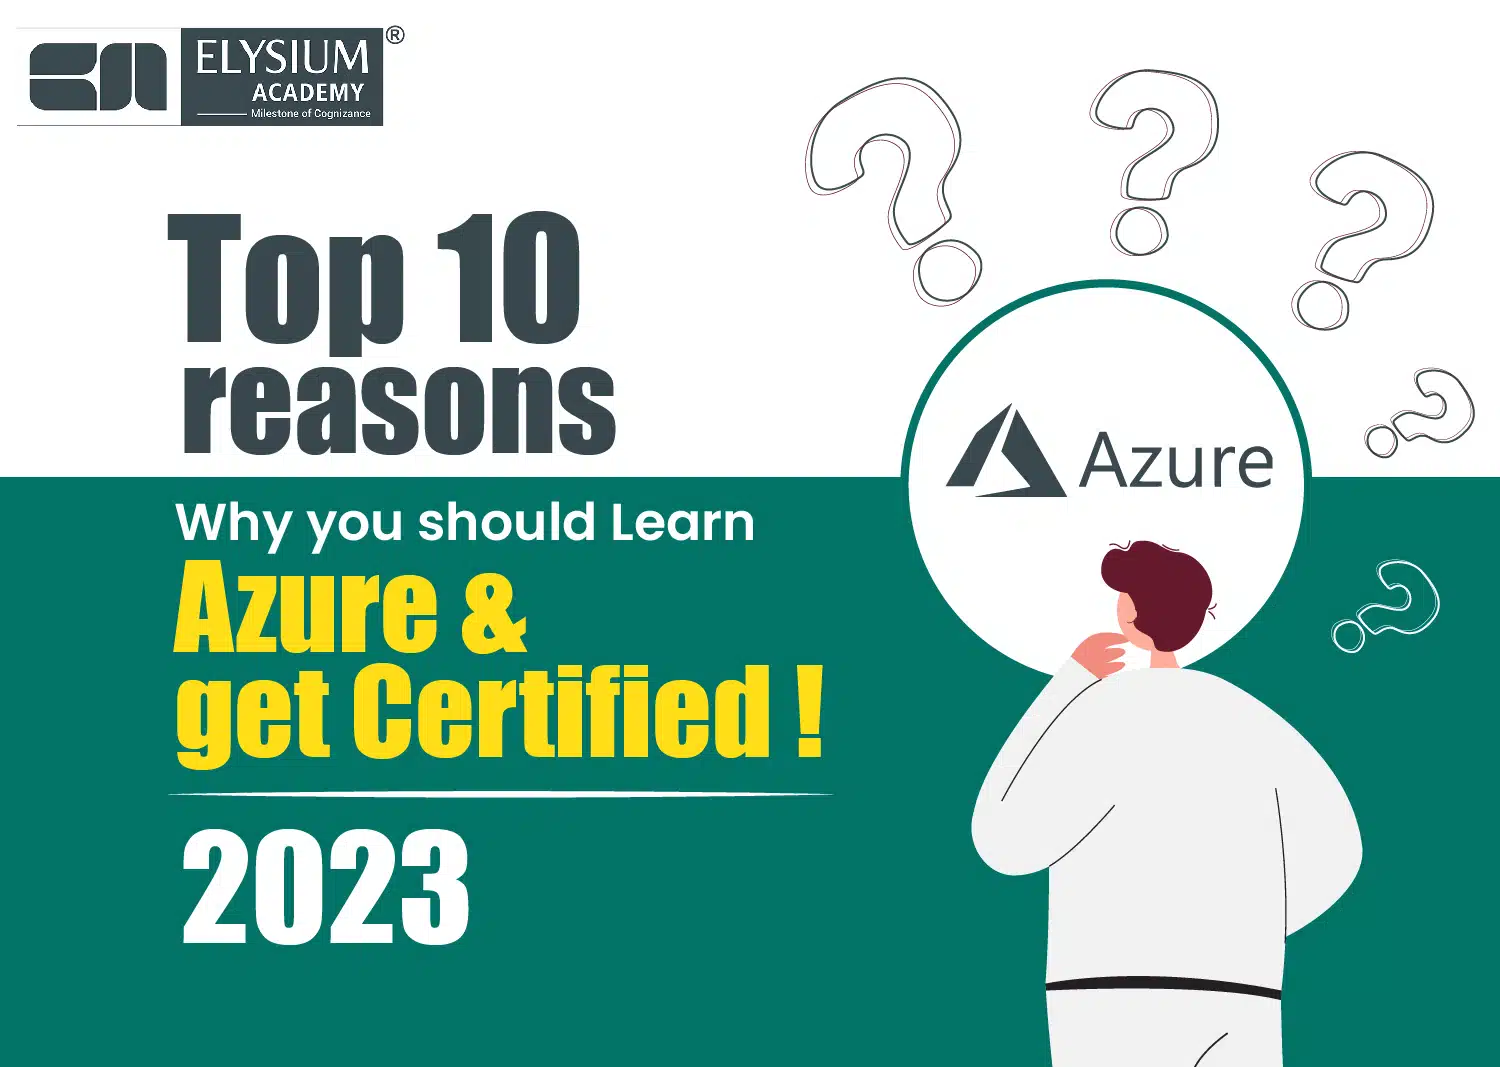 Azure Certification Training Course